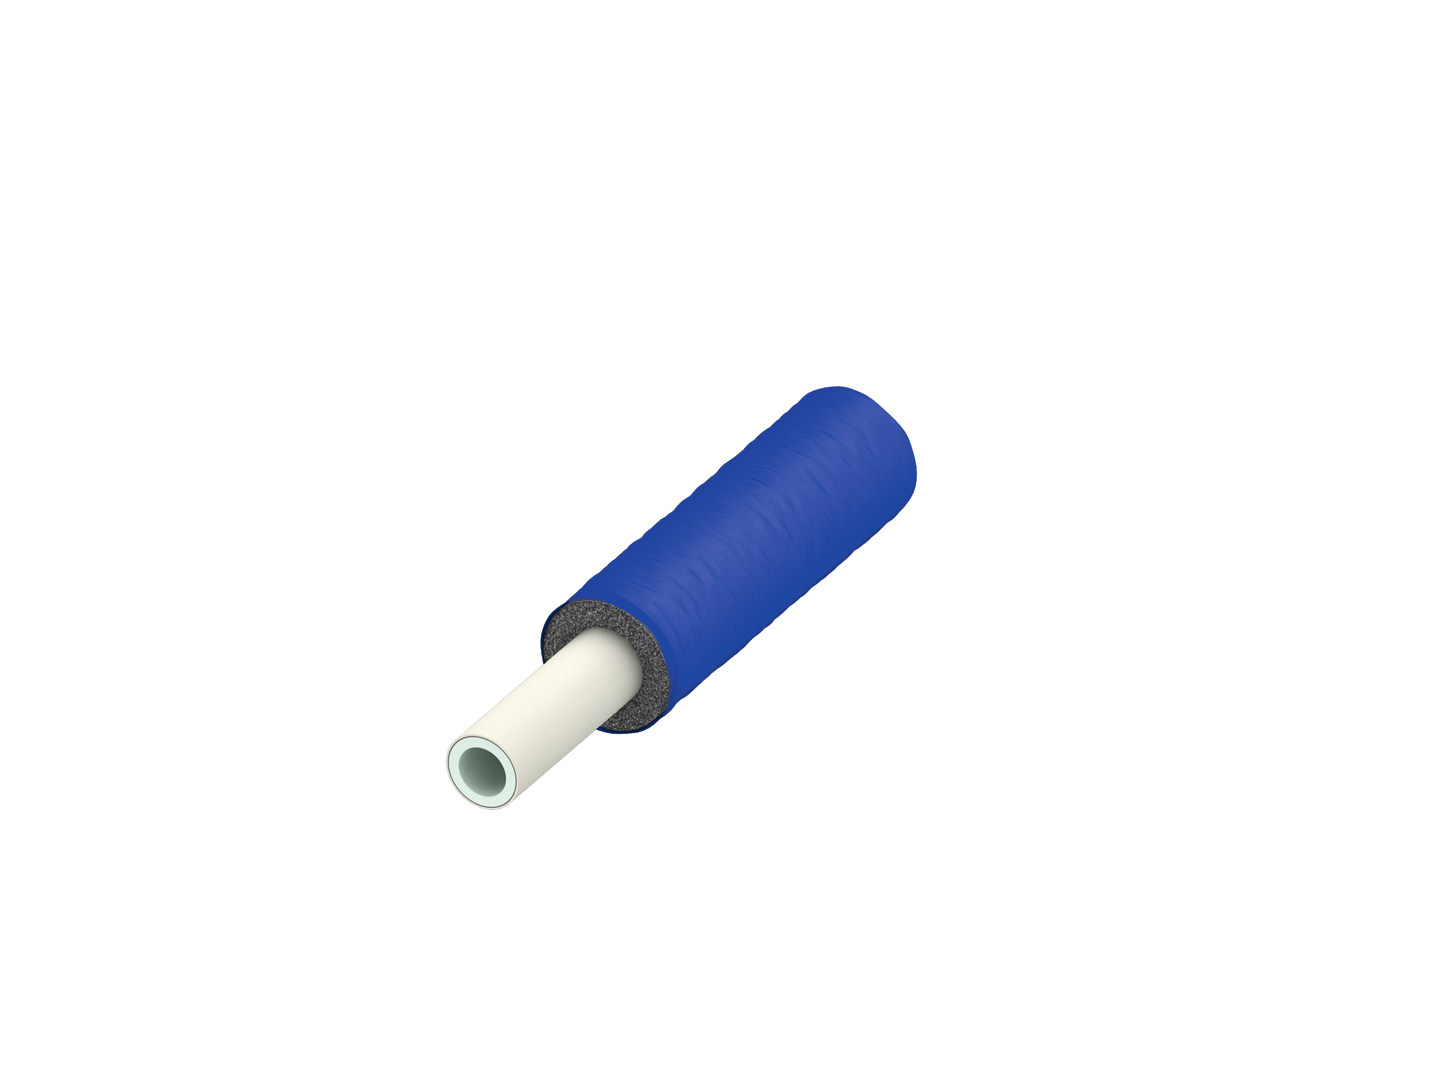 TECEflex Verbundrohr PE-Xc/Al 16x2,2 vorgedämmt RS 6, blau, Rolle 75m